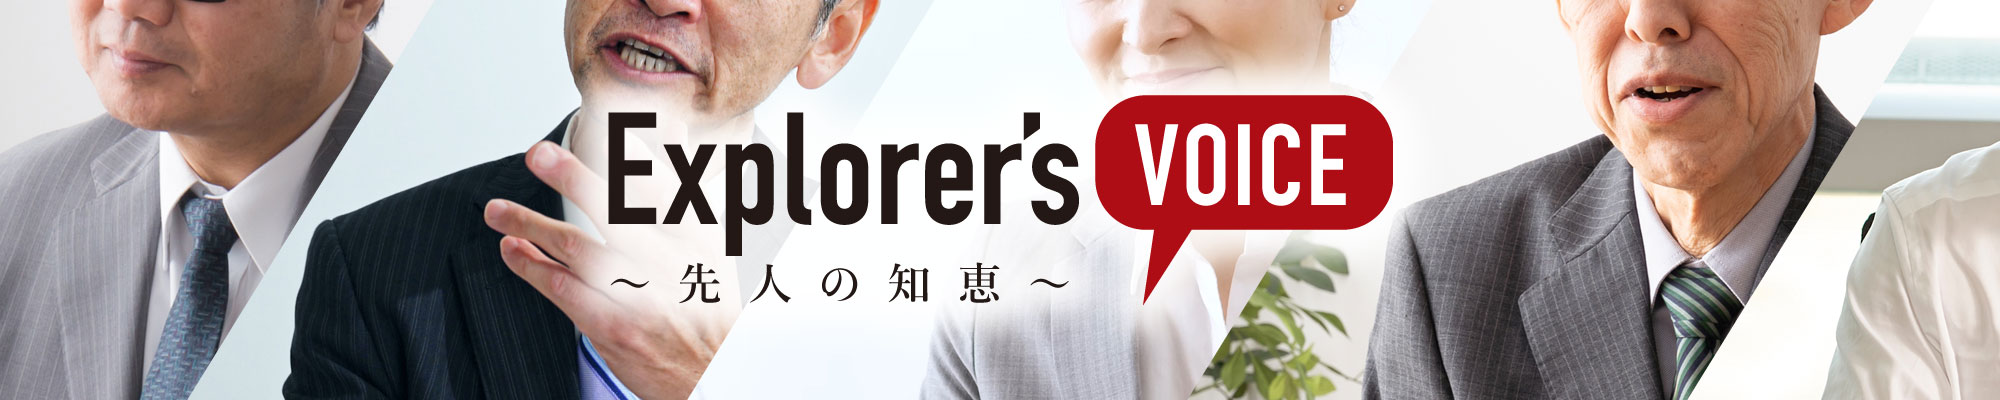 Explorer's Voice 〜先人の知恵〜